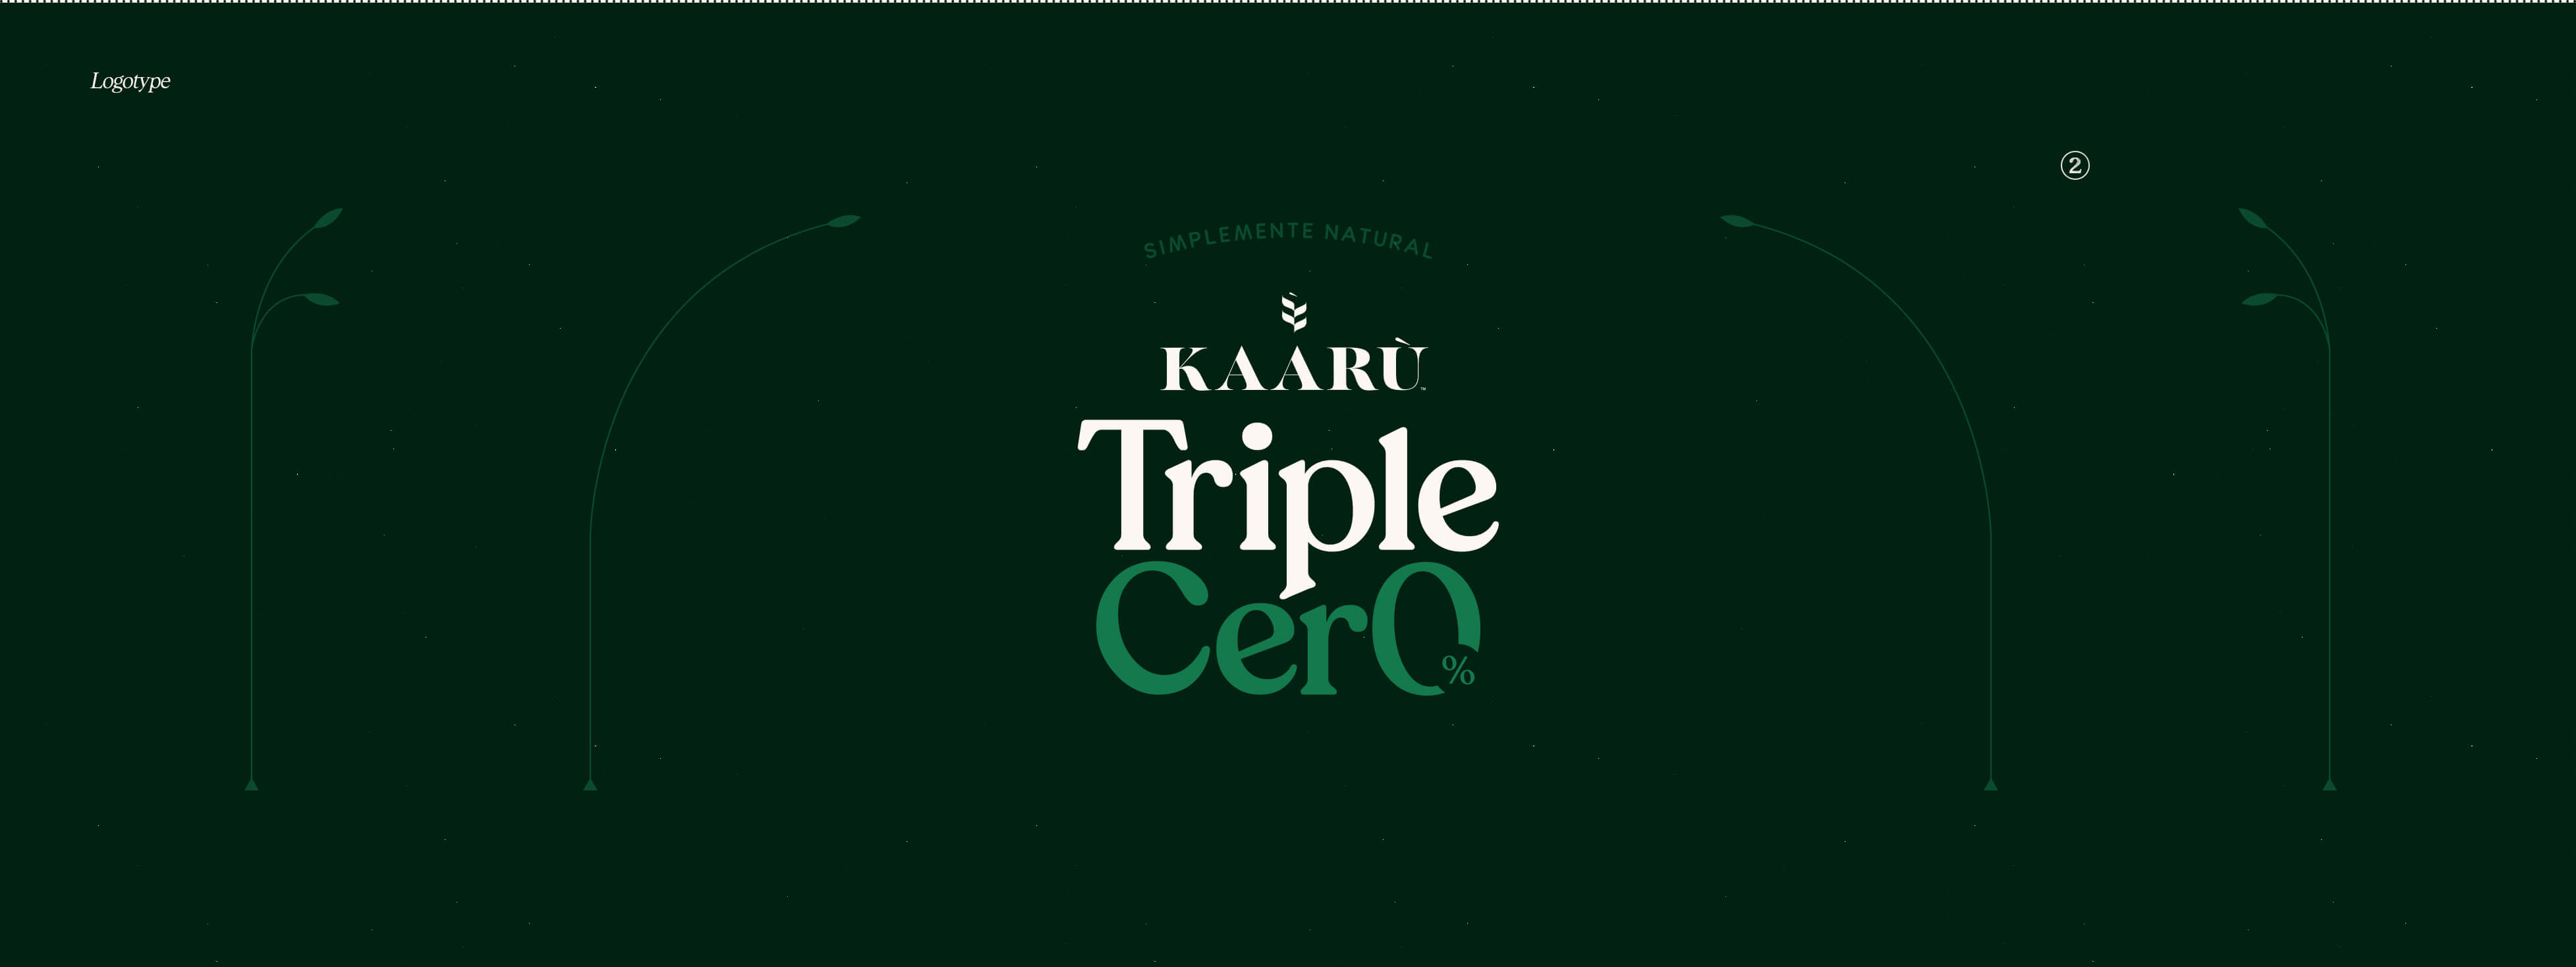 Kaaru Triple Cero Premium Yogurt Packaging Design and Illustration